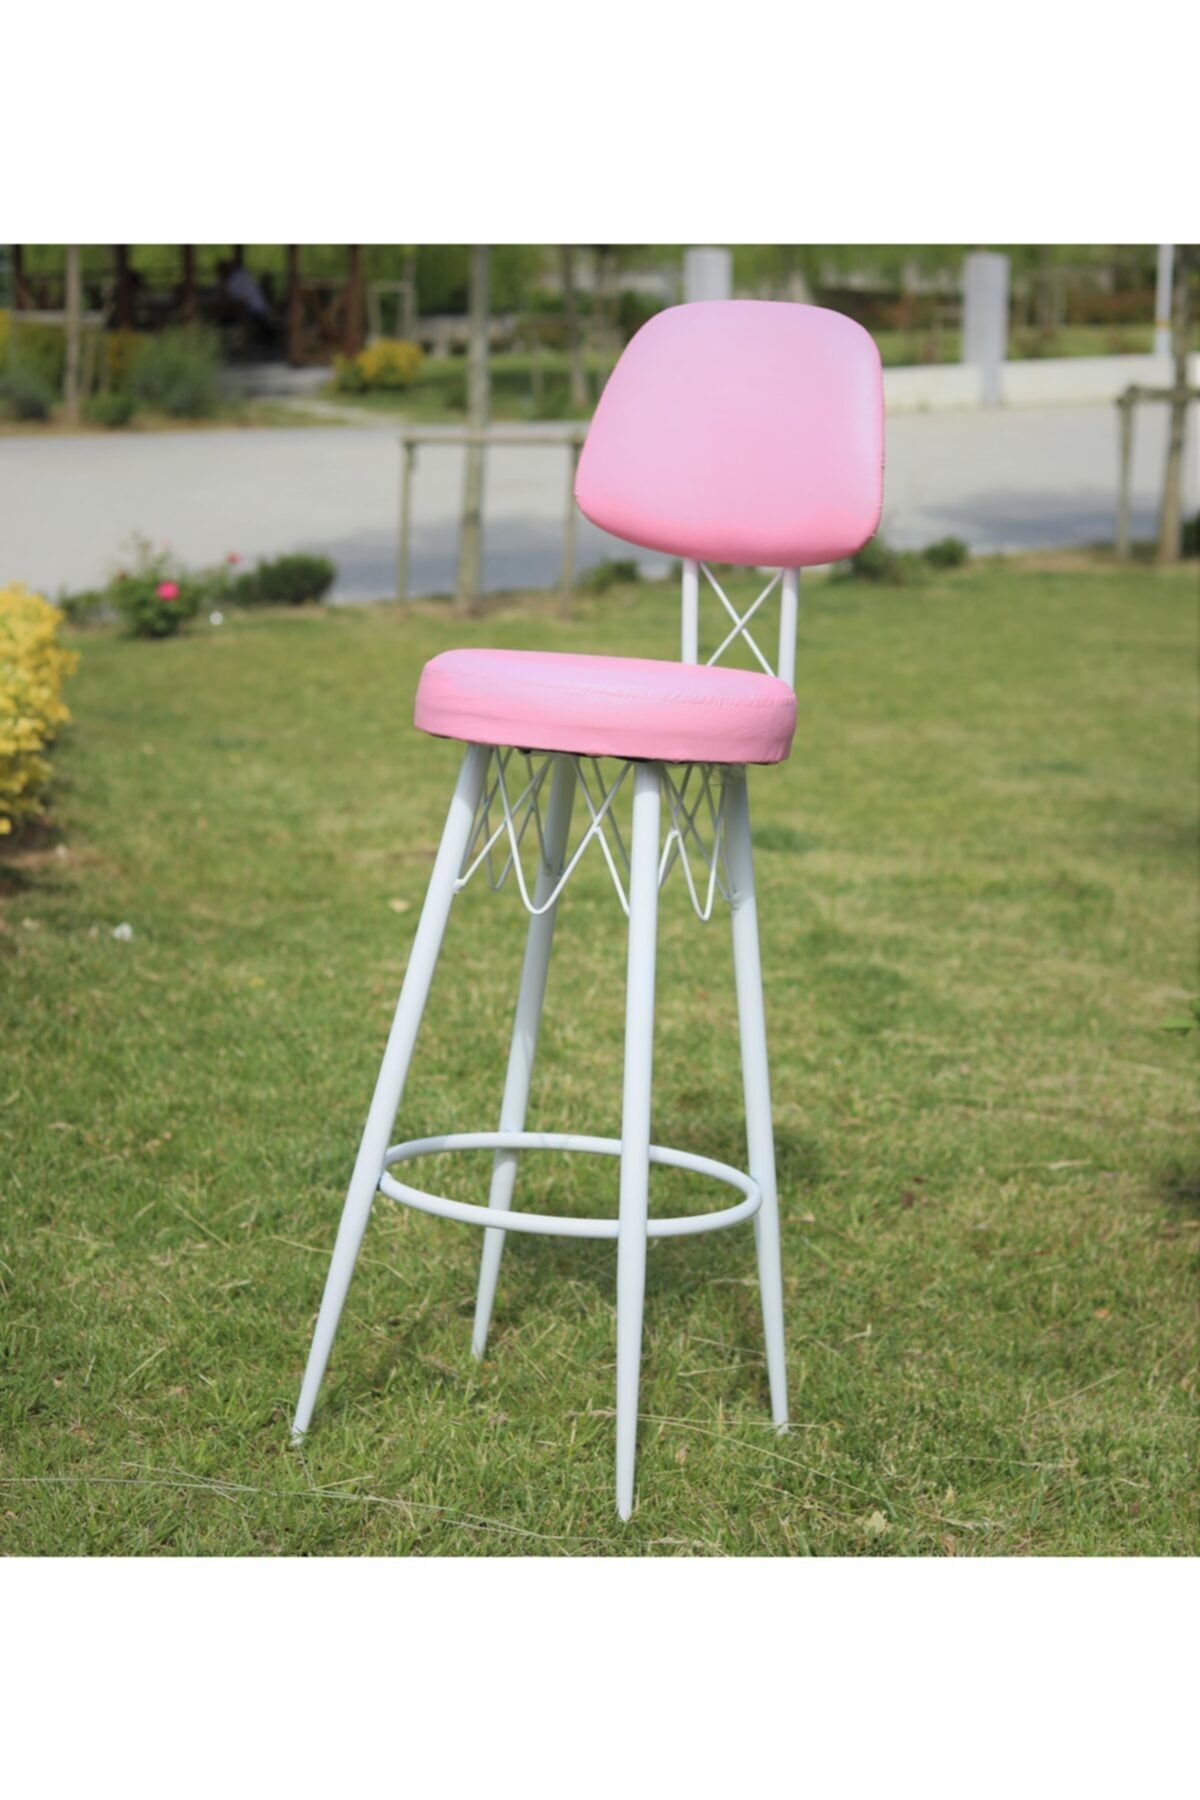 J&S QUALİTY Pembe Mutfak Sandalyeleri 65 cm